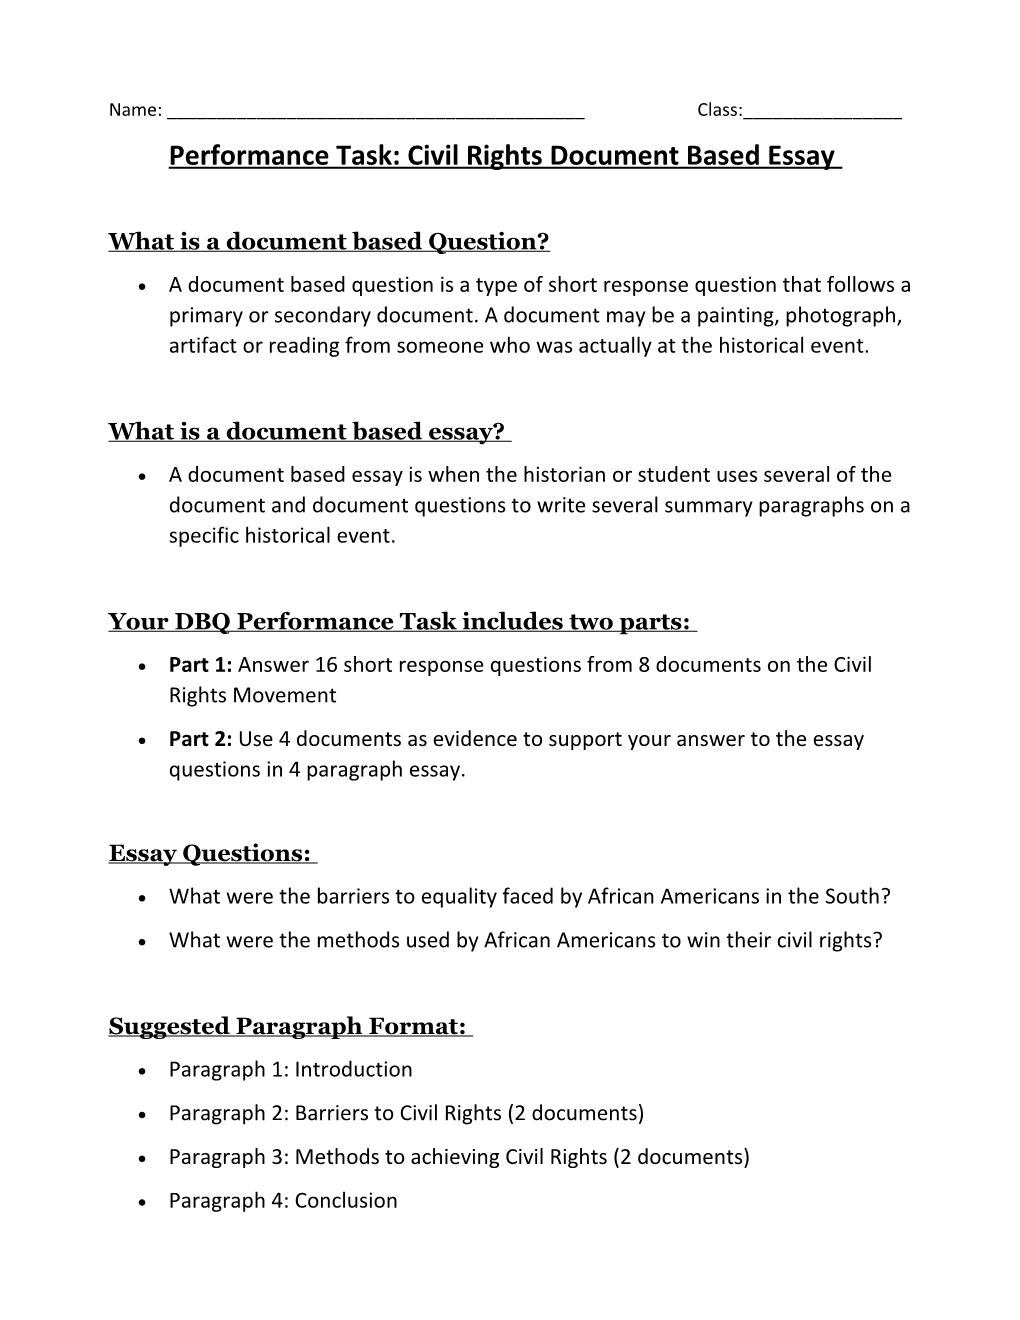 Performance Task: Civil Rights Document Based Essay